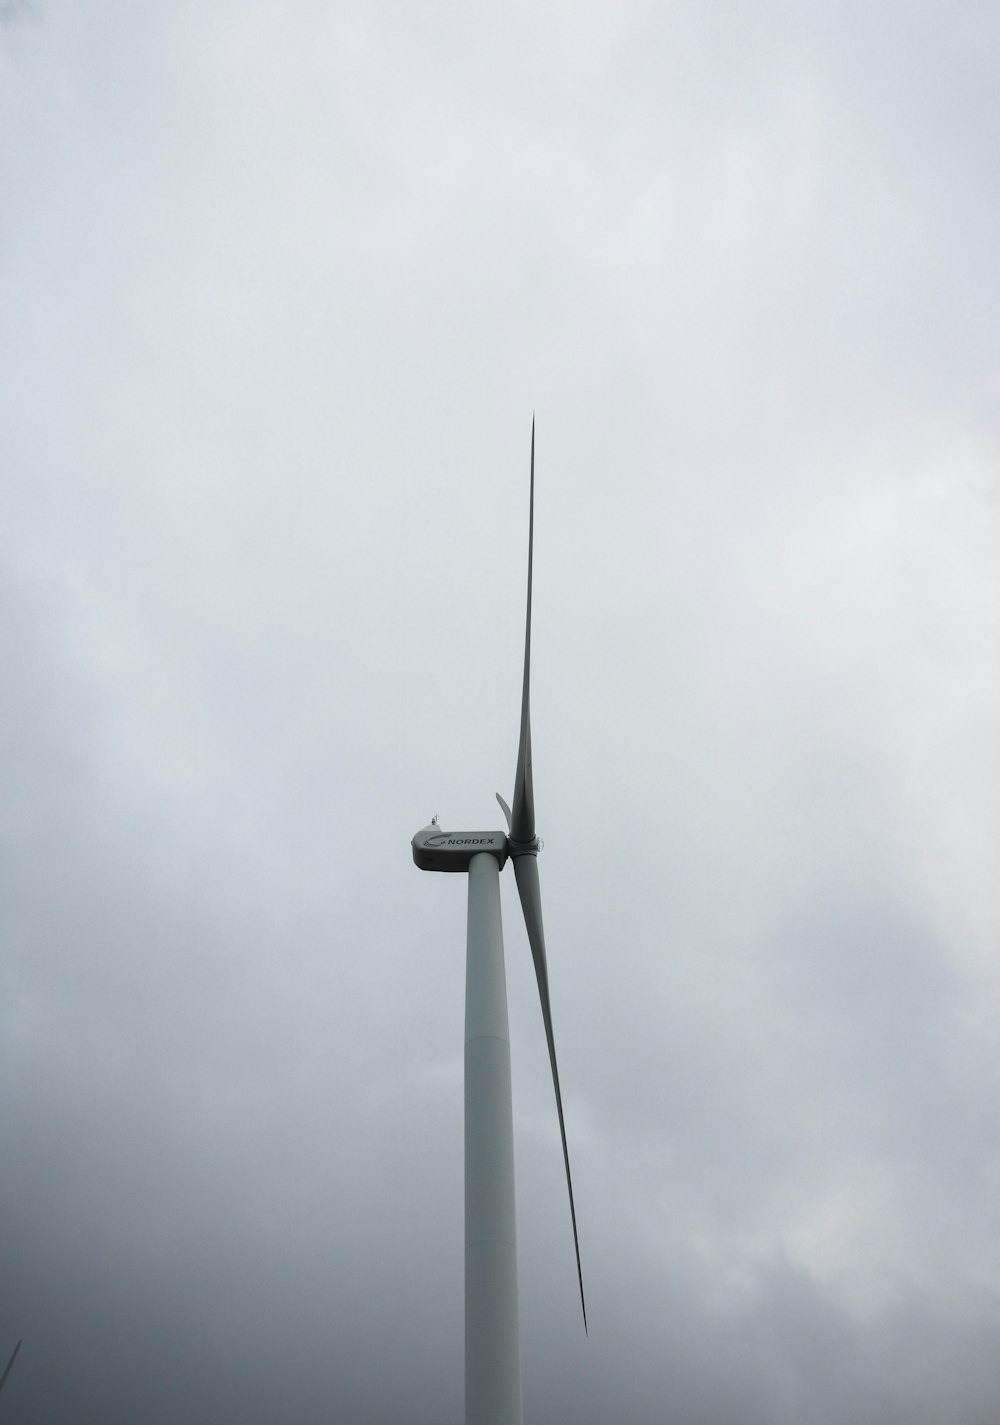 gray wind turbine under gray sky